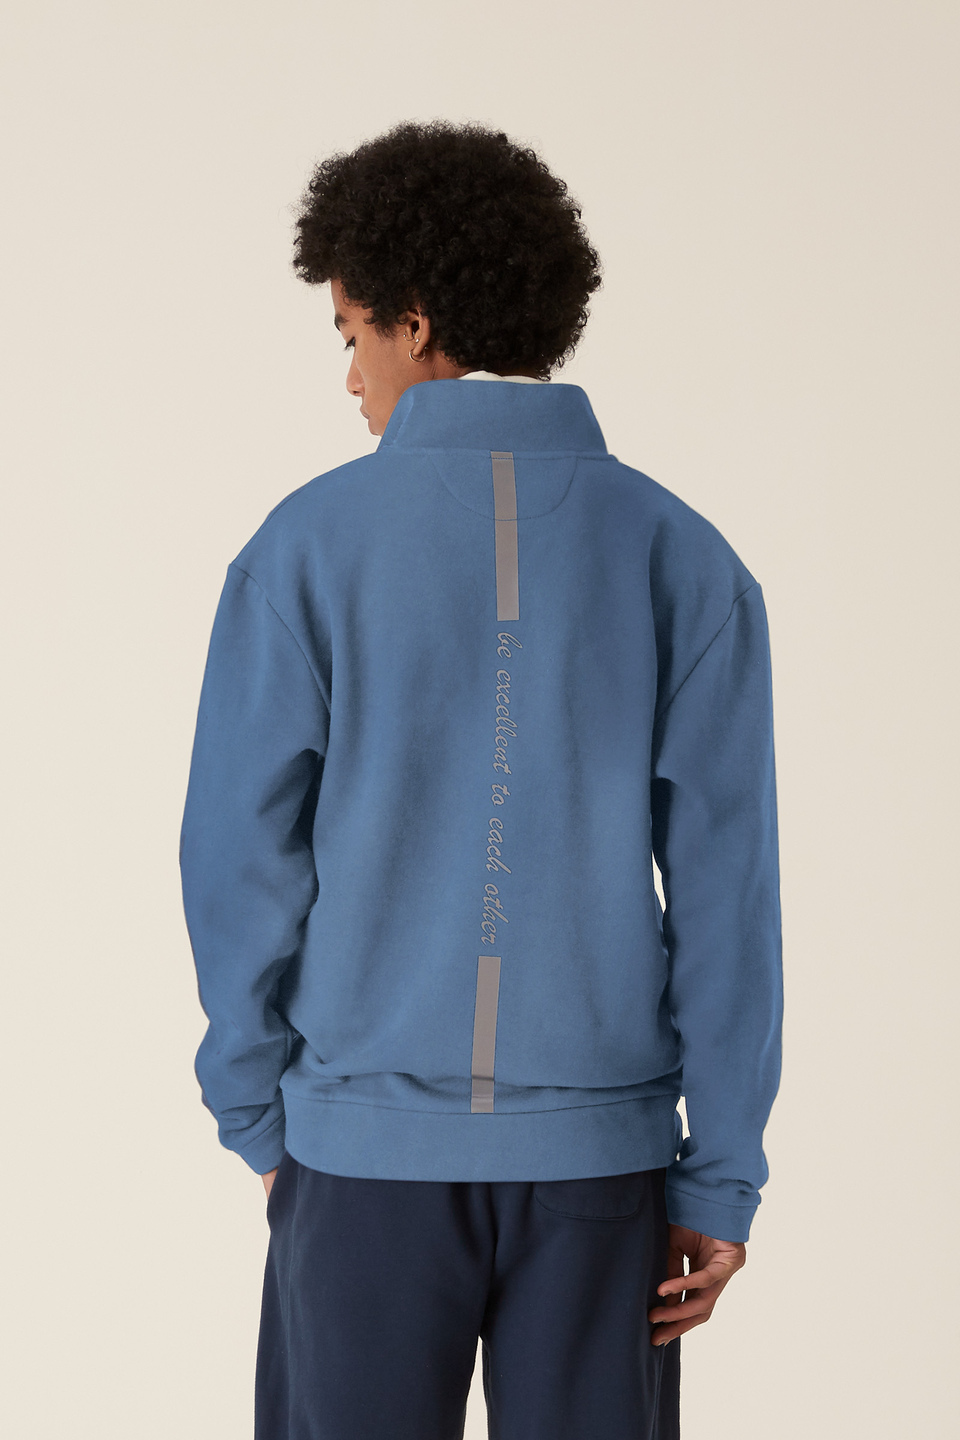 LMRTN high-neck sweatshirt | La Martina - Official Online Shop